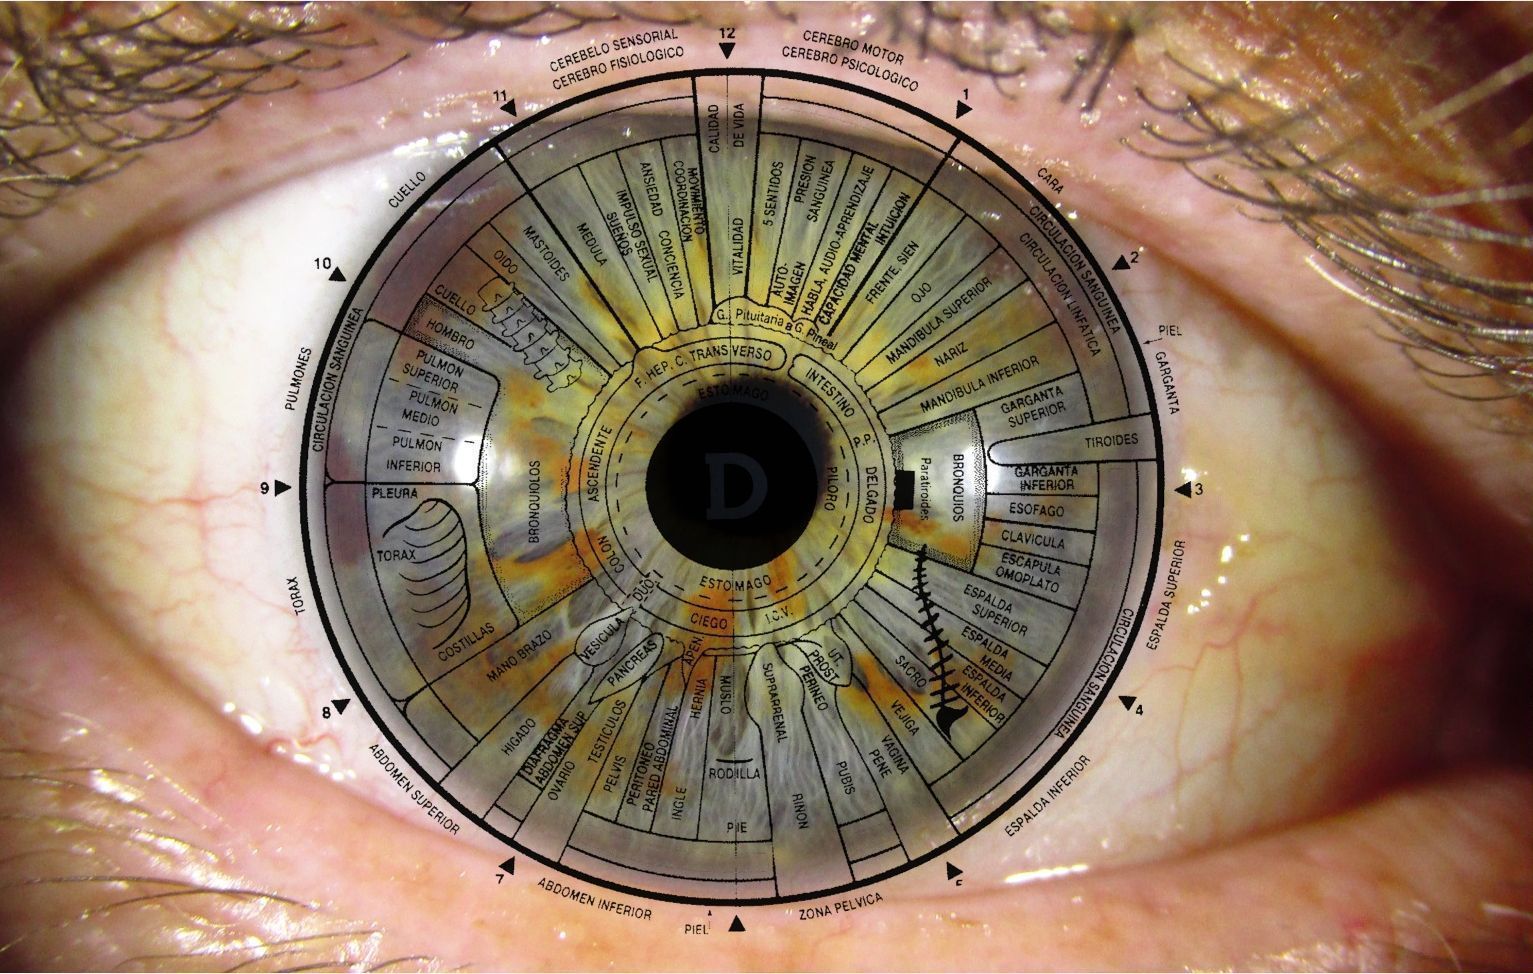 Заболевания органа глаза. Иридодиагностика аппарат. Иридодиагностика офтальмология. Иридодиагностика атлас. Иридодиагностика по радужной оболочке глаза.